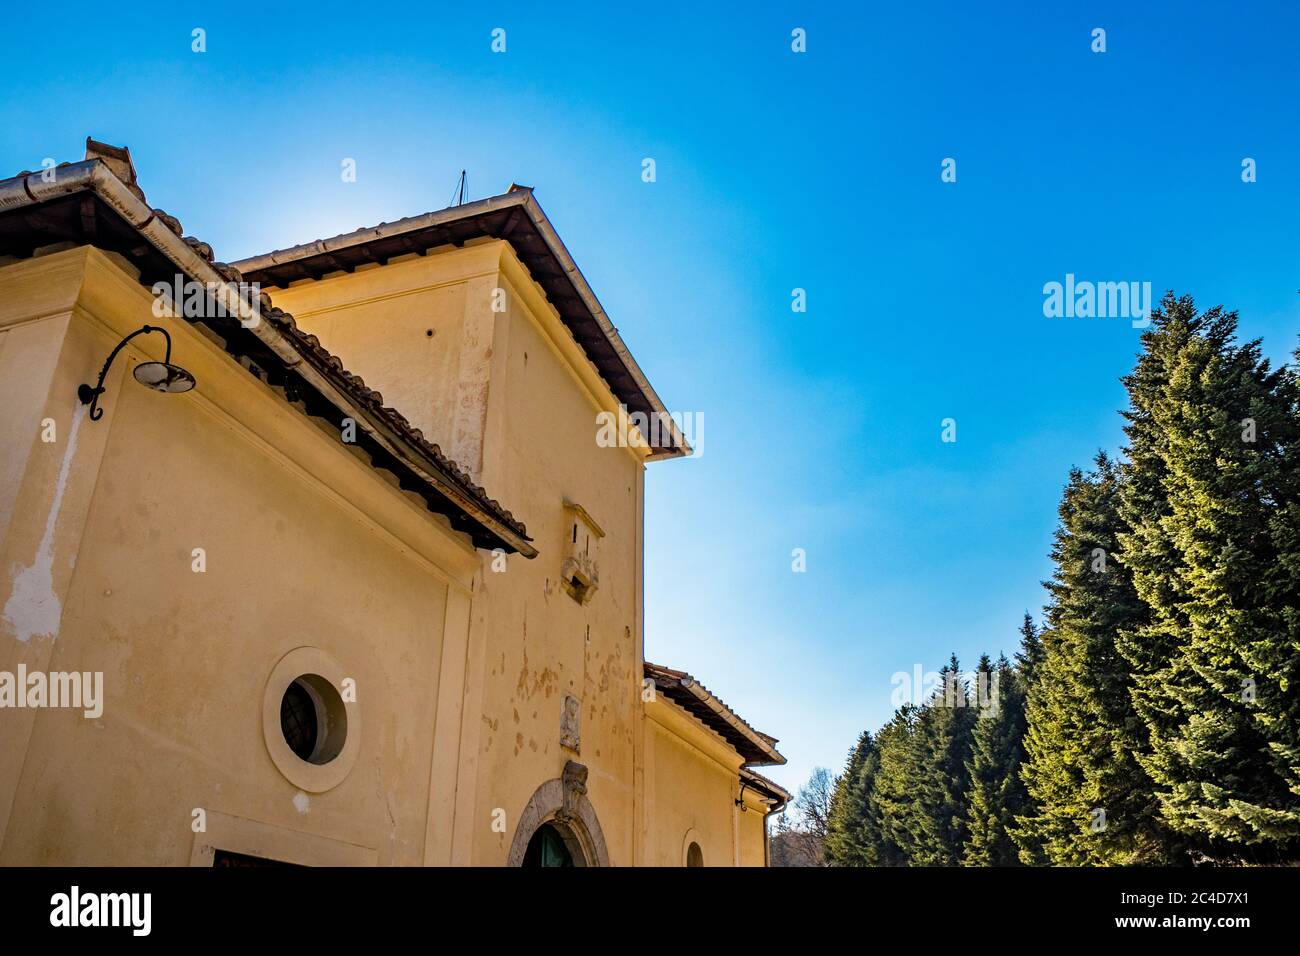 Trisulti Charterhouse is a former Carthusian e Cistercian monastery, in Collepardo, province of Frosinone, Lazio, central Italy. The entrance to the a Stock Photo